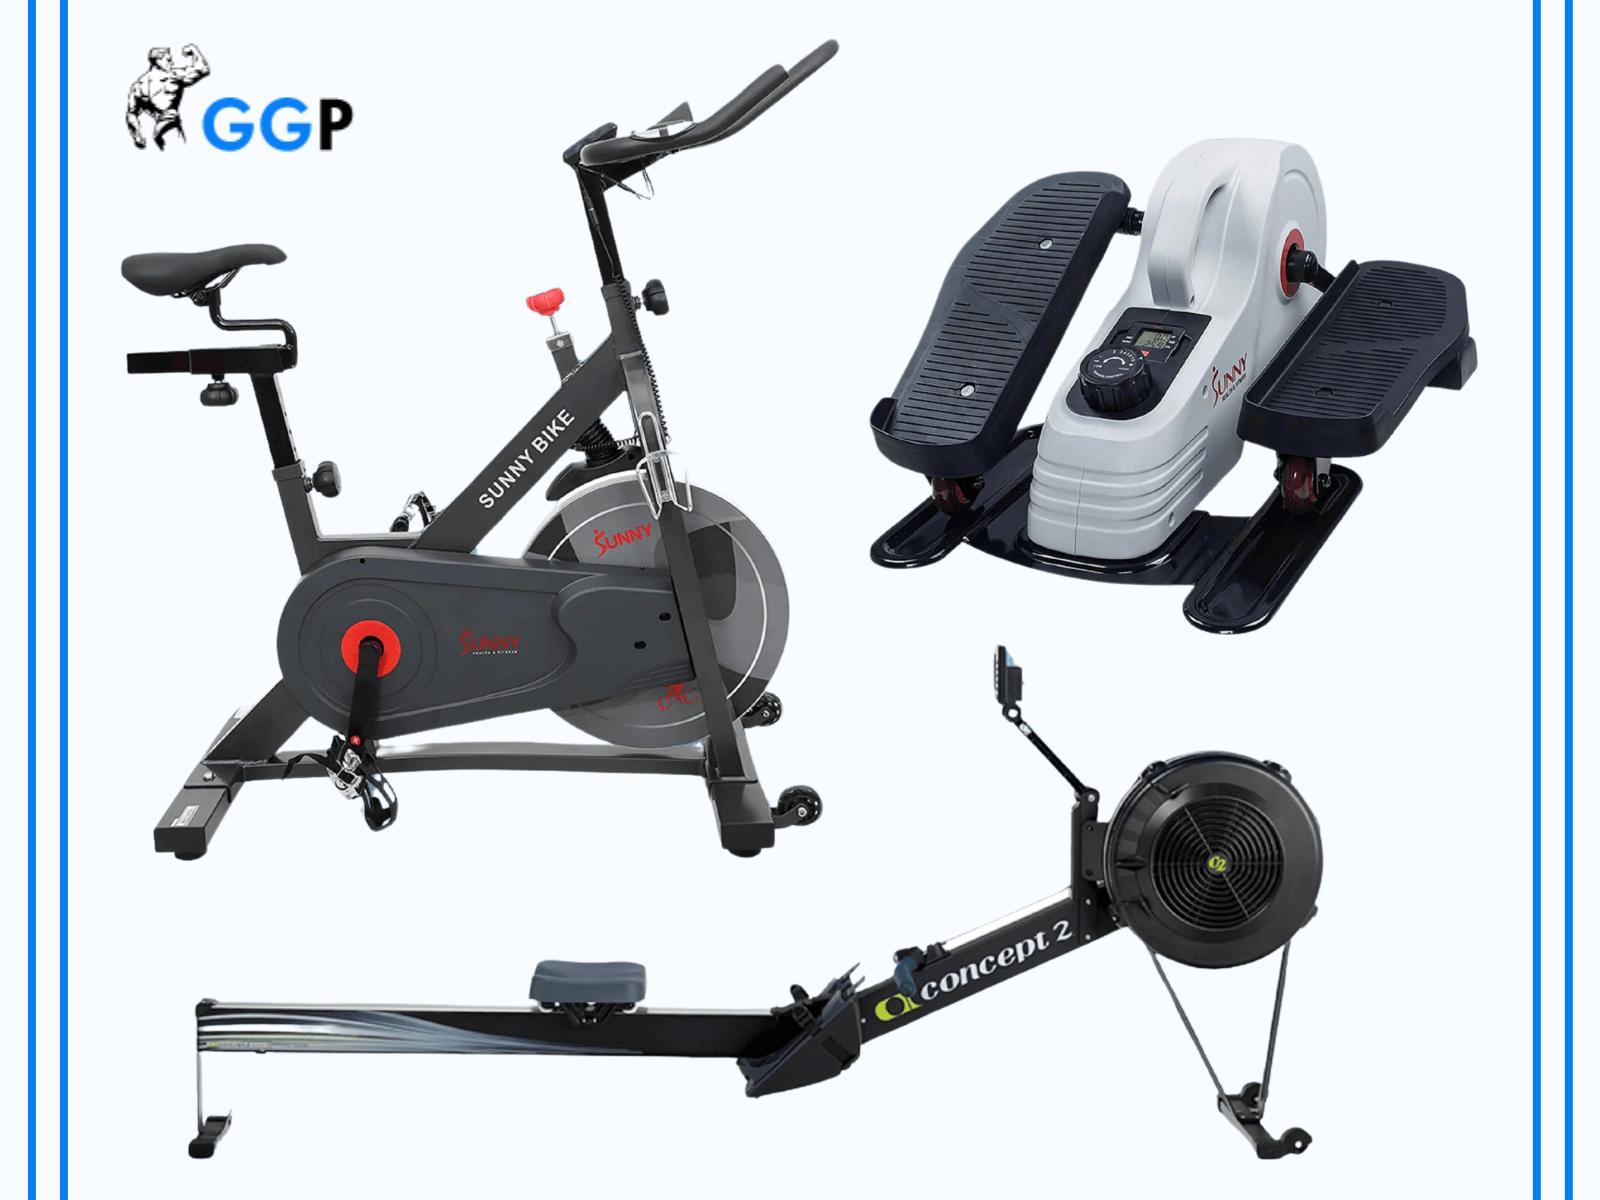 3 Cardiovascular Equipment such as Treadmills, Stationary bikes, Elliptical trainers